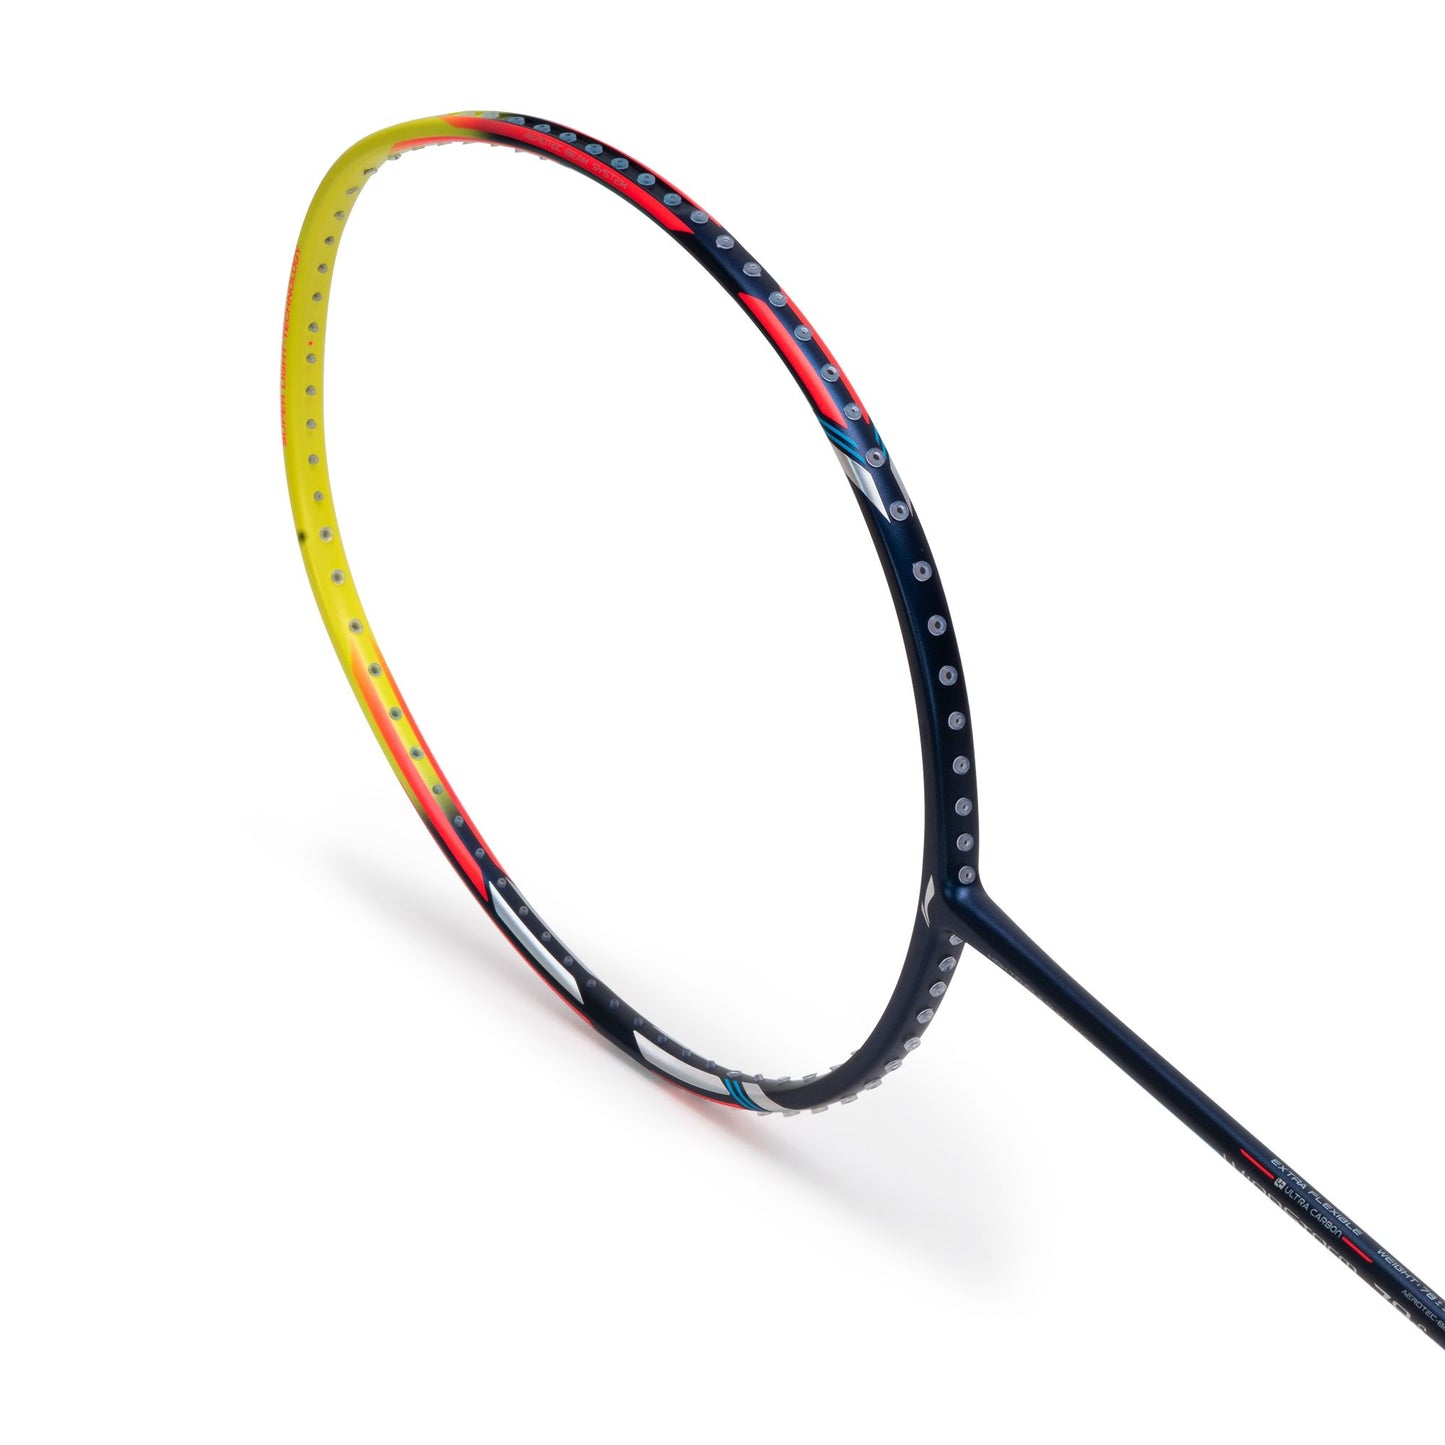 Li-Ning Windstorm 78 S (Navy/Lime) Badminton Racket